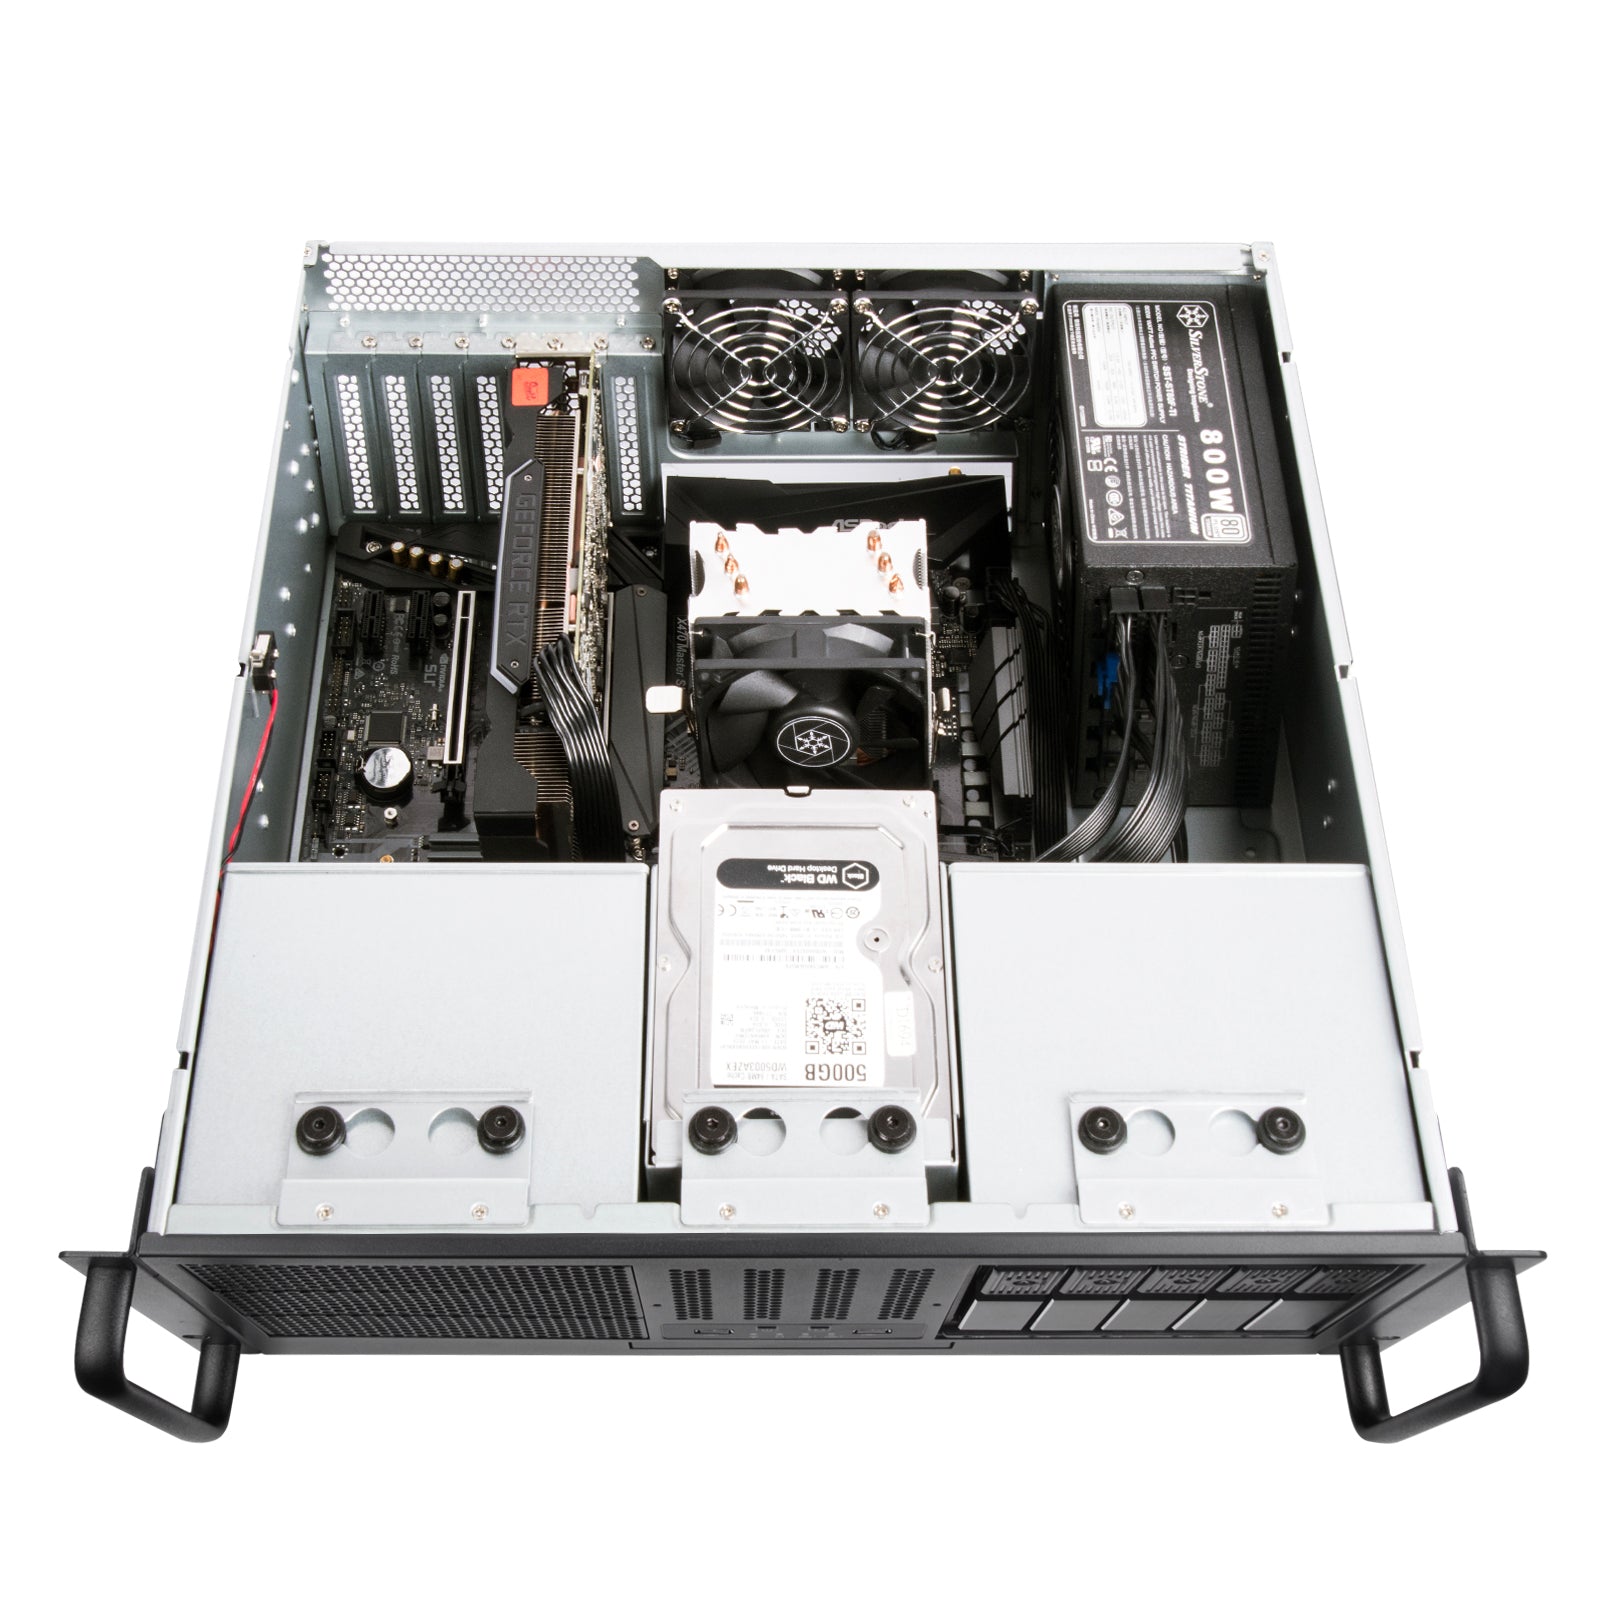 SilverStone RM41-506 4U 6-bay 5.25” rackmount server chassis